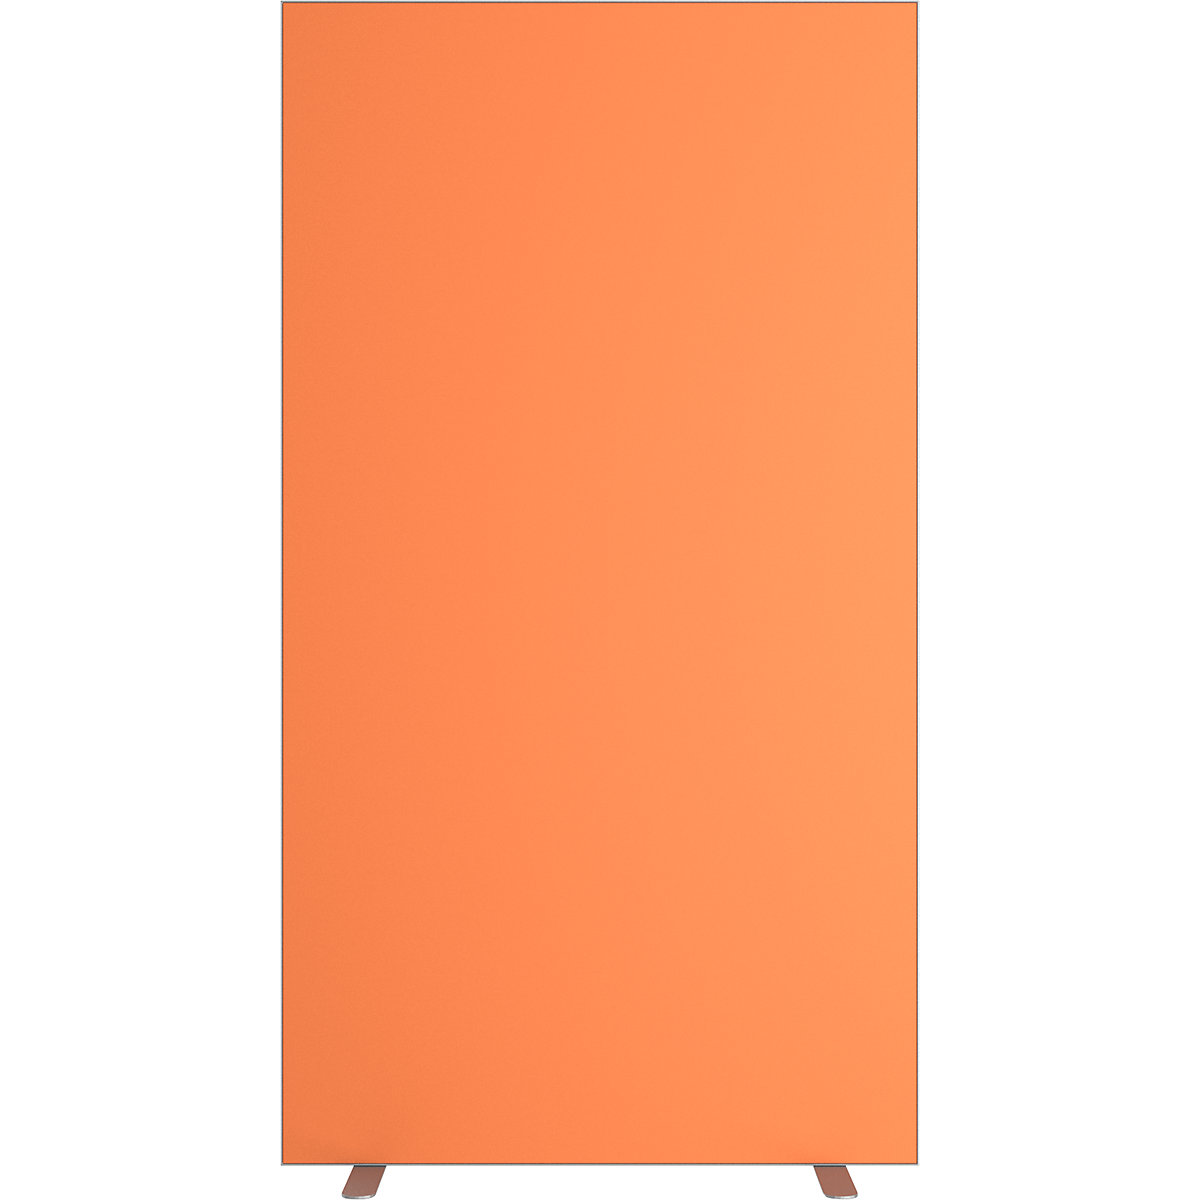 Trennwand easyScreen, einfarbig, orange, Breite 940 mm-13